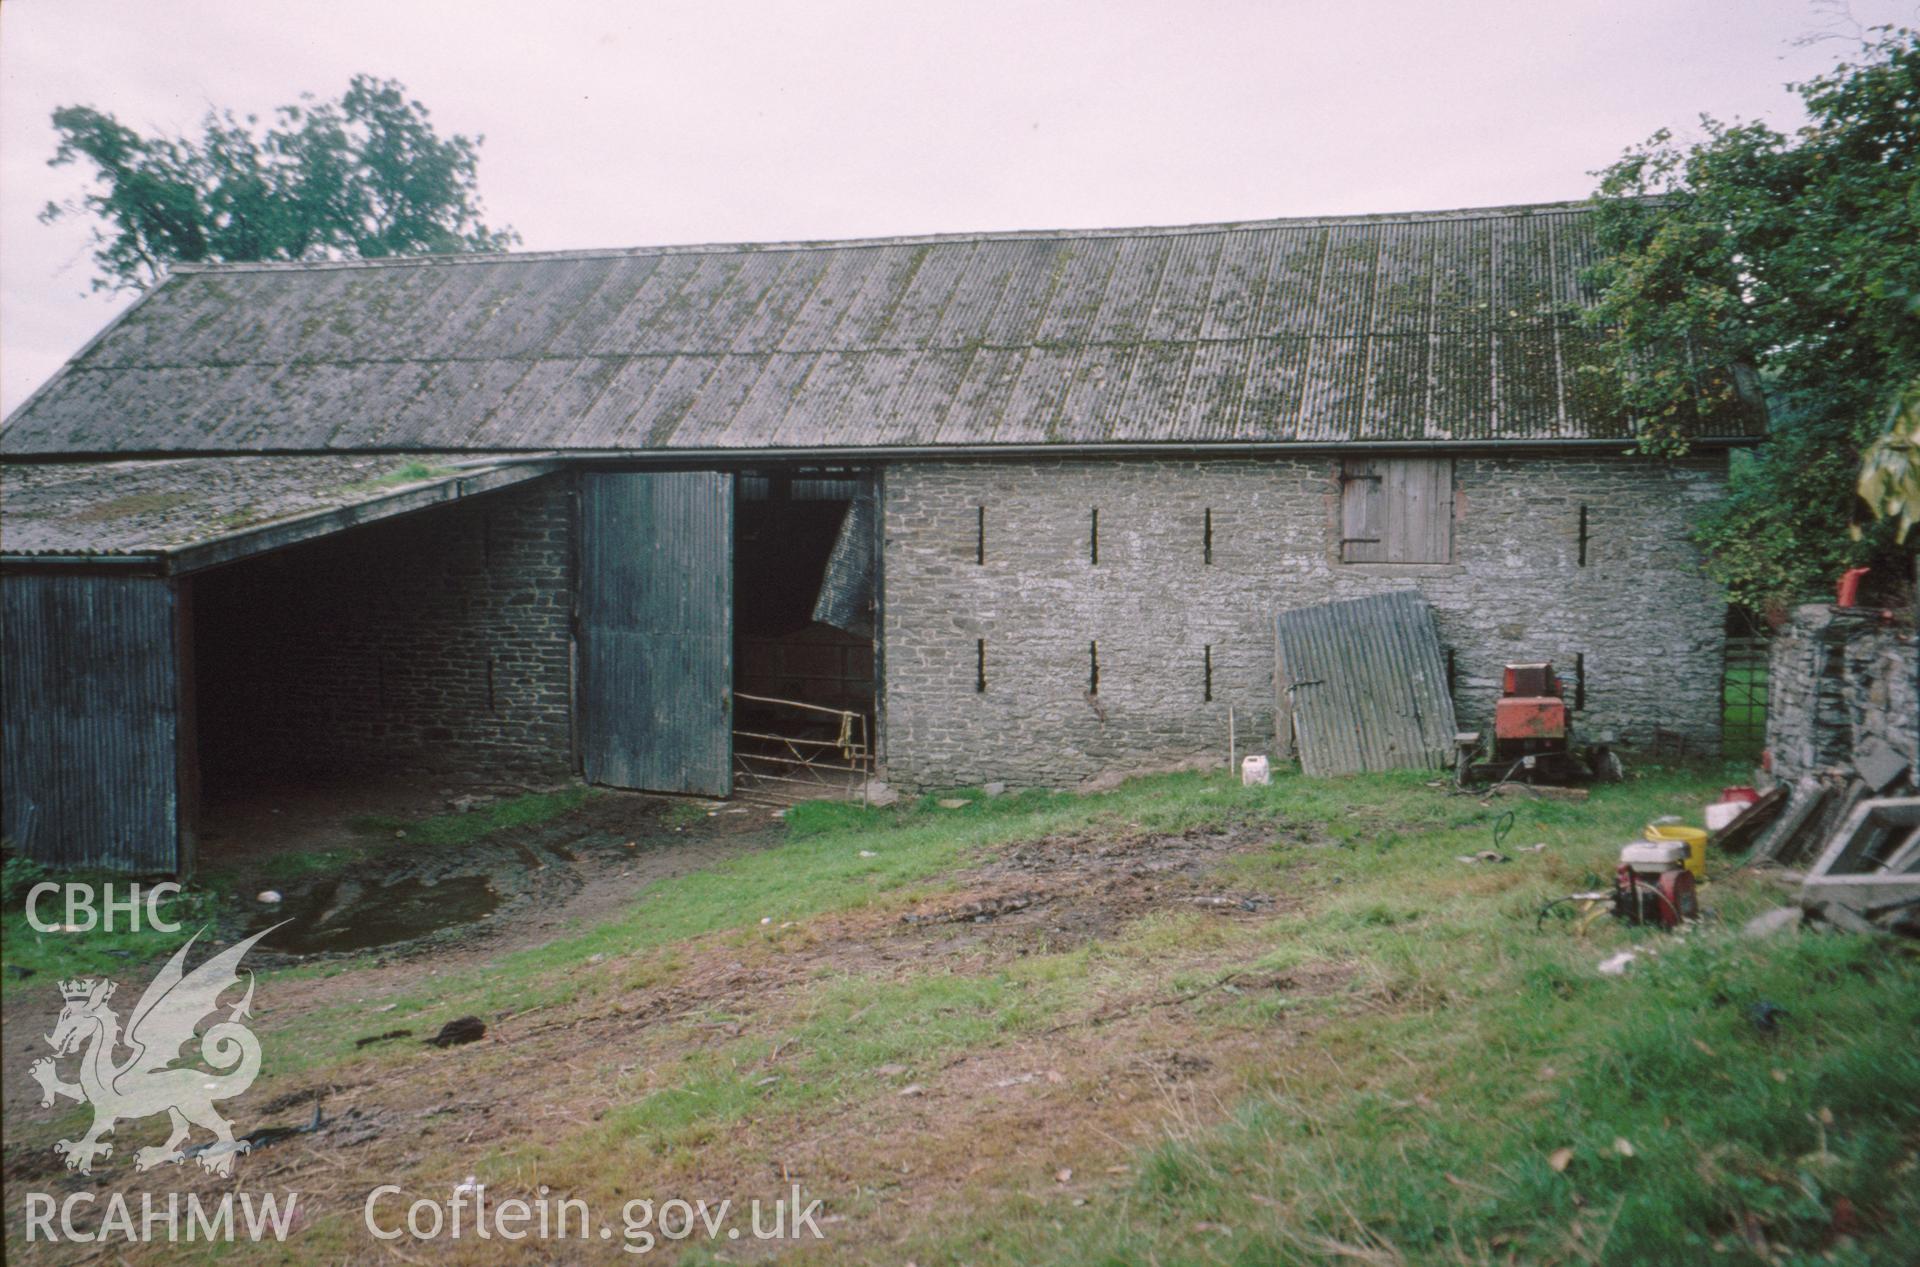 Digital copy of a colour slide showing an exterior view of Pilleth Court Farm Building.